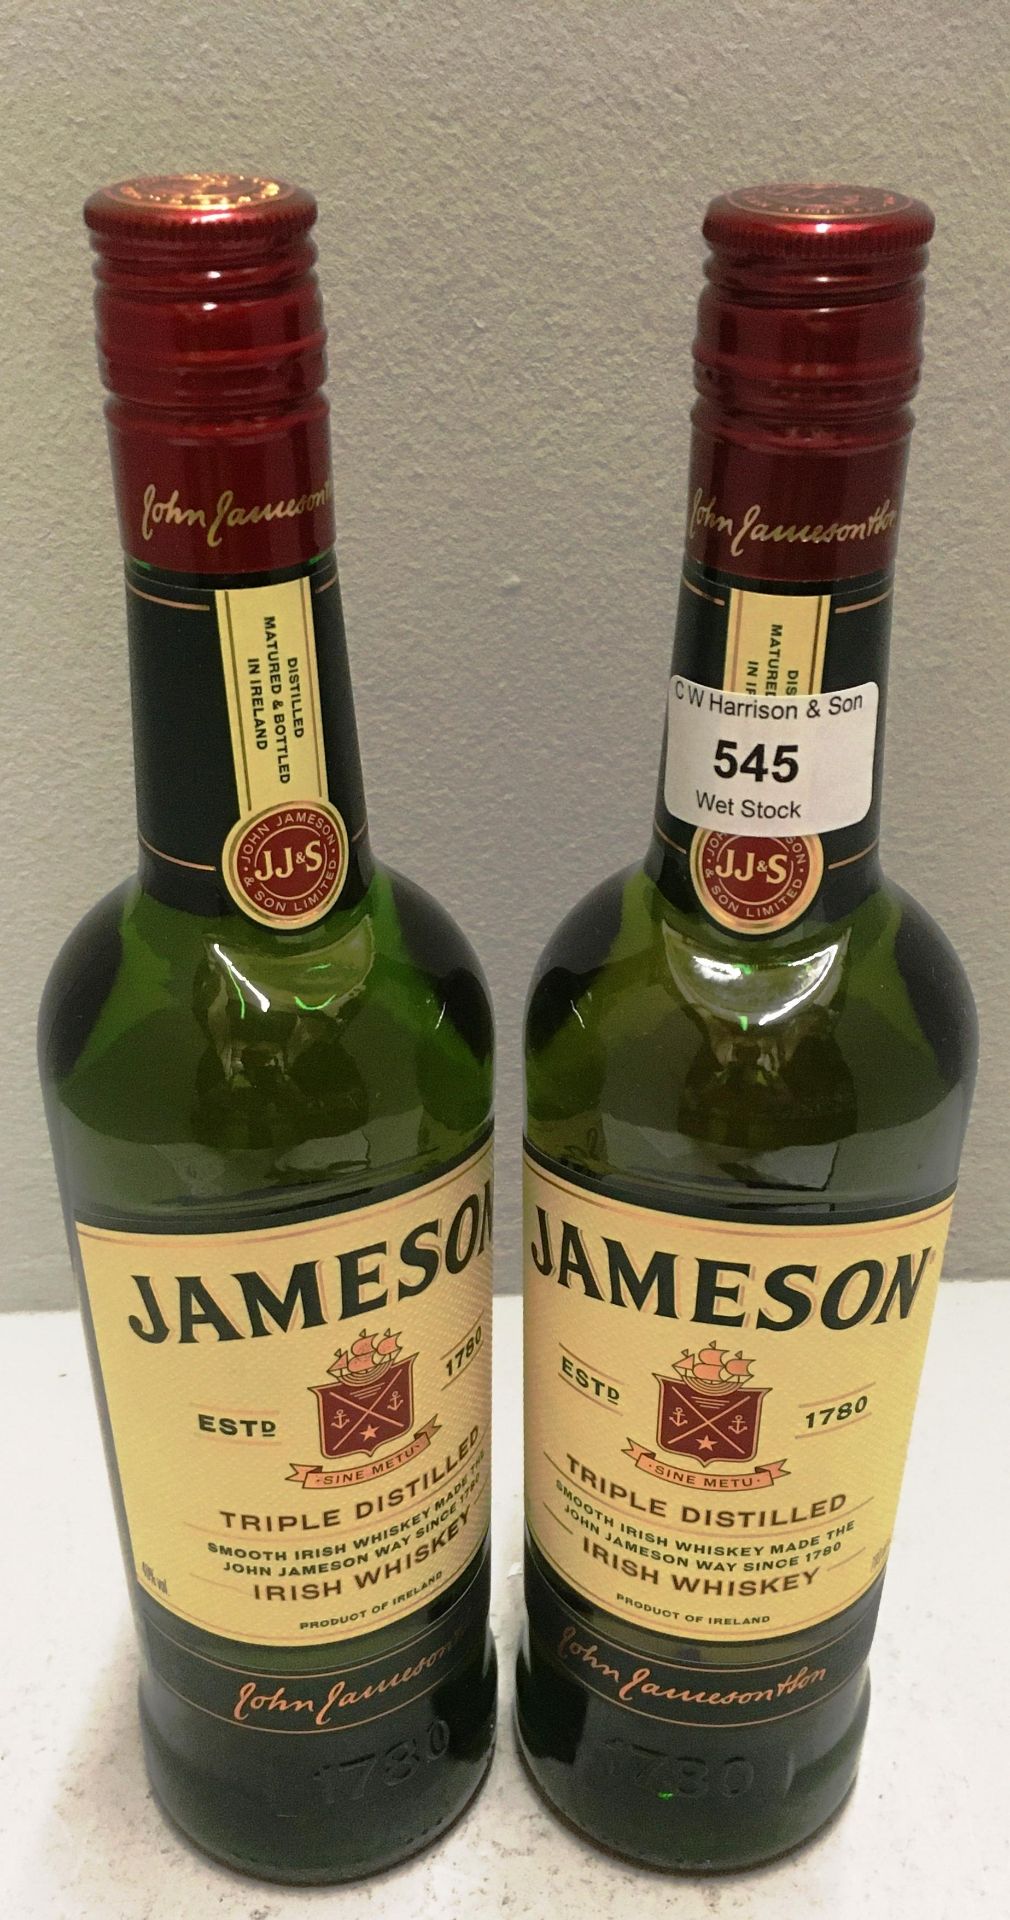 2 x 700ml bottles of Jameson Triple Distilled Irish Whiskey